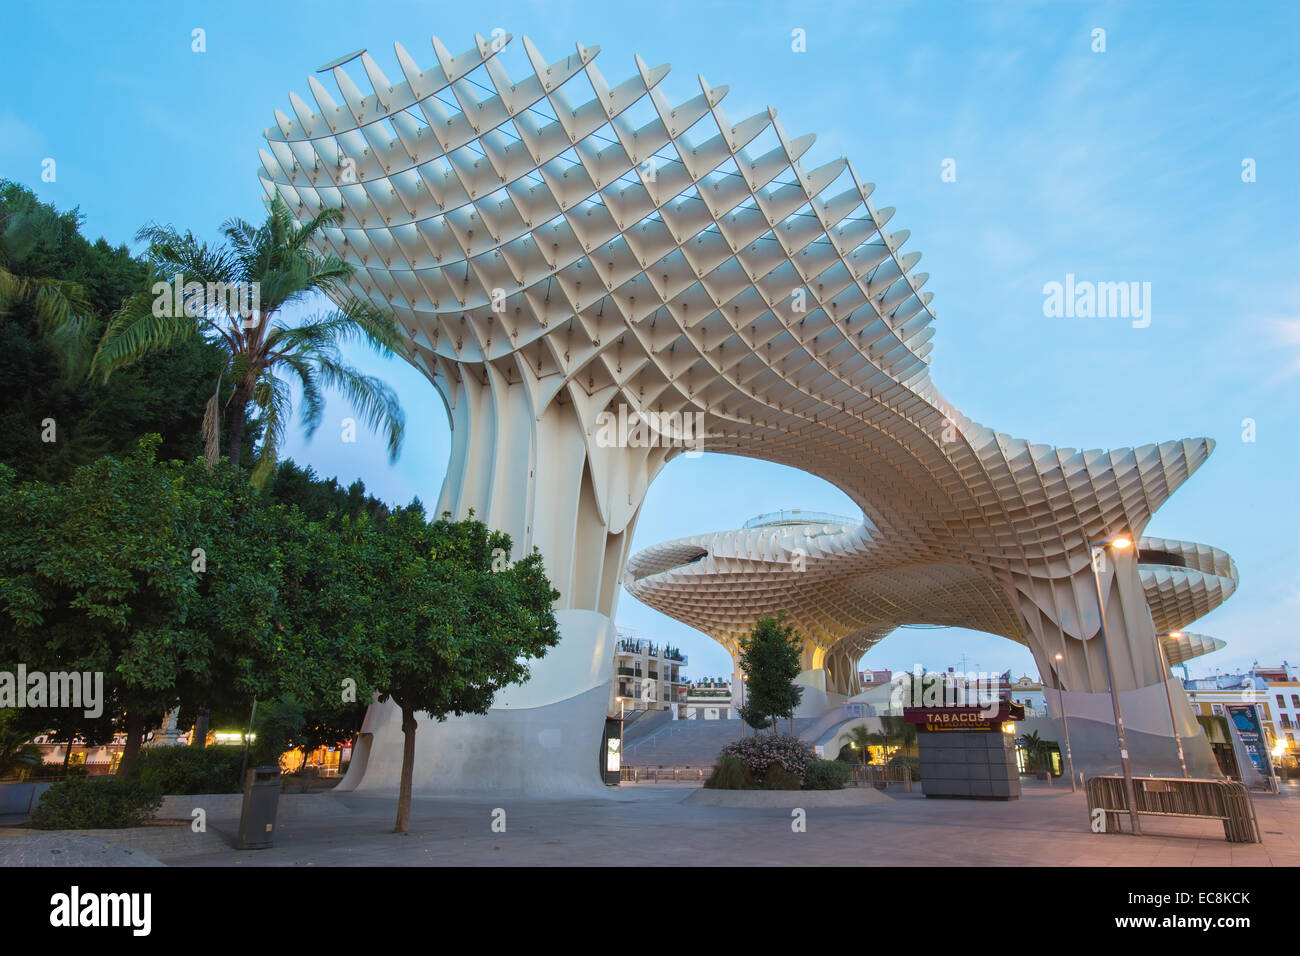 SEVILLE, SPAIN - OCTOBER 28, 2014: Metropol Parasol wooden structure located at La Encarnacion square Stock Photo